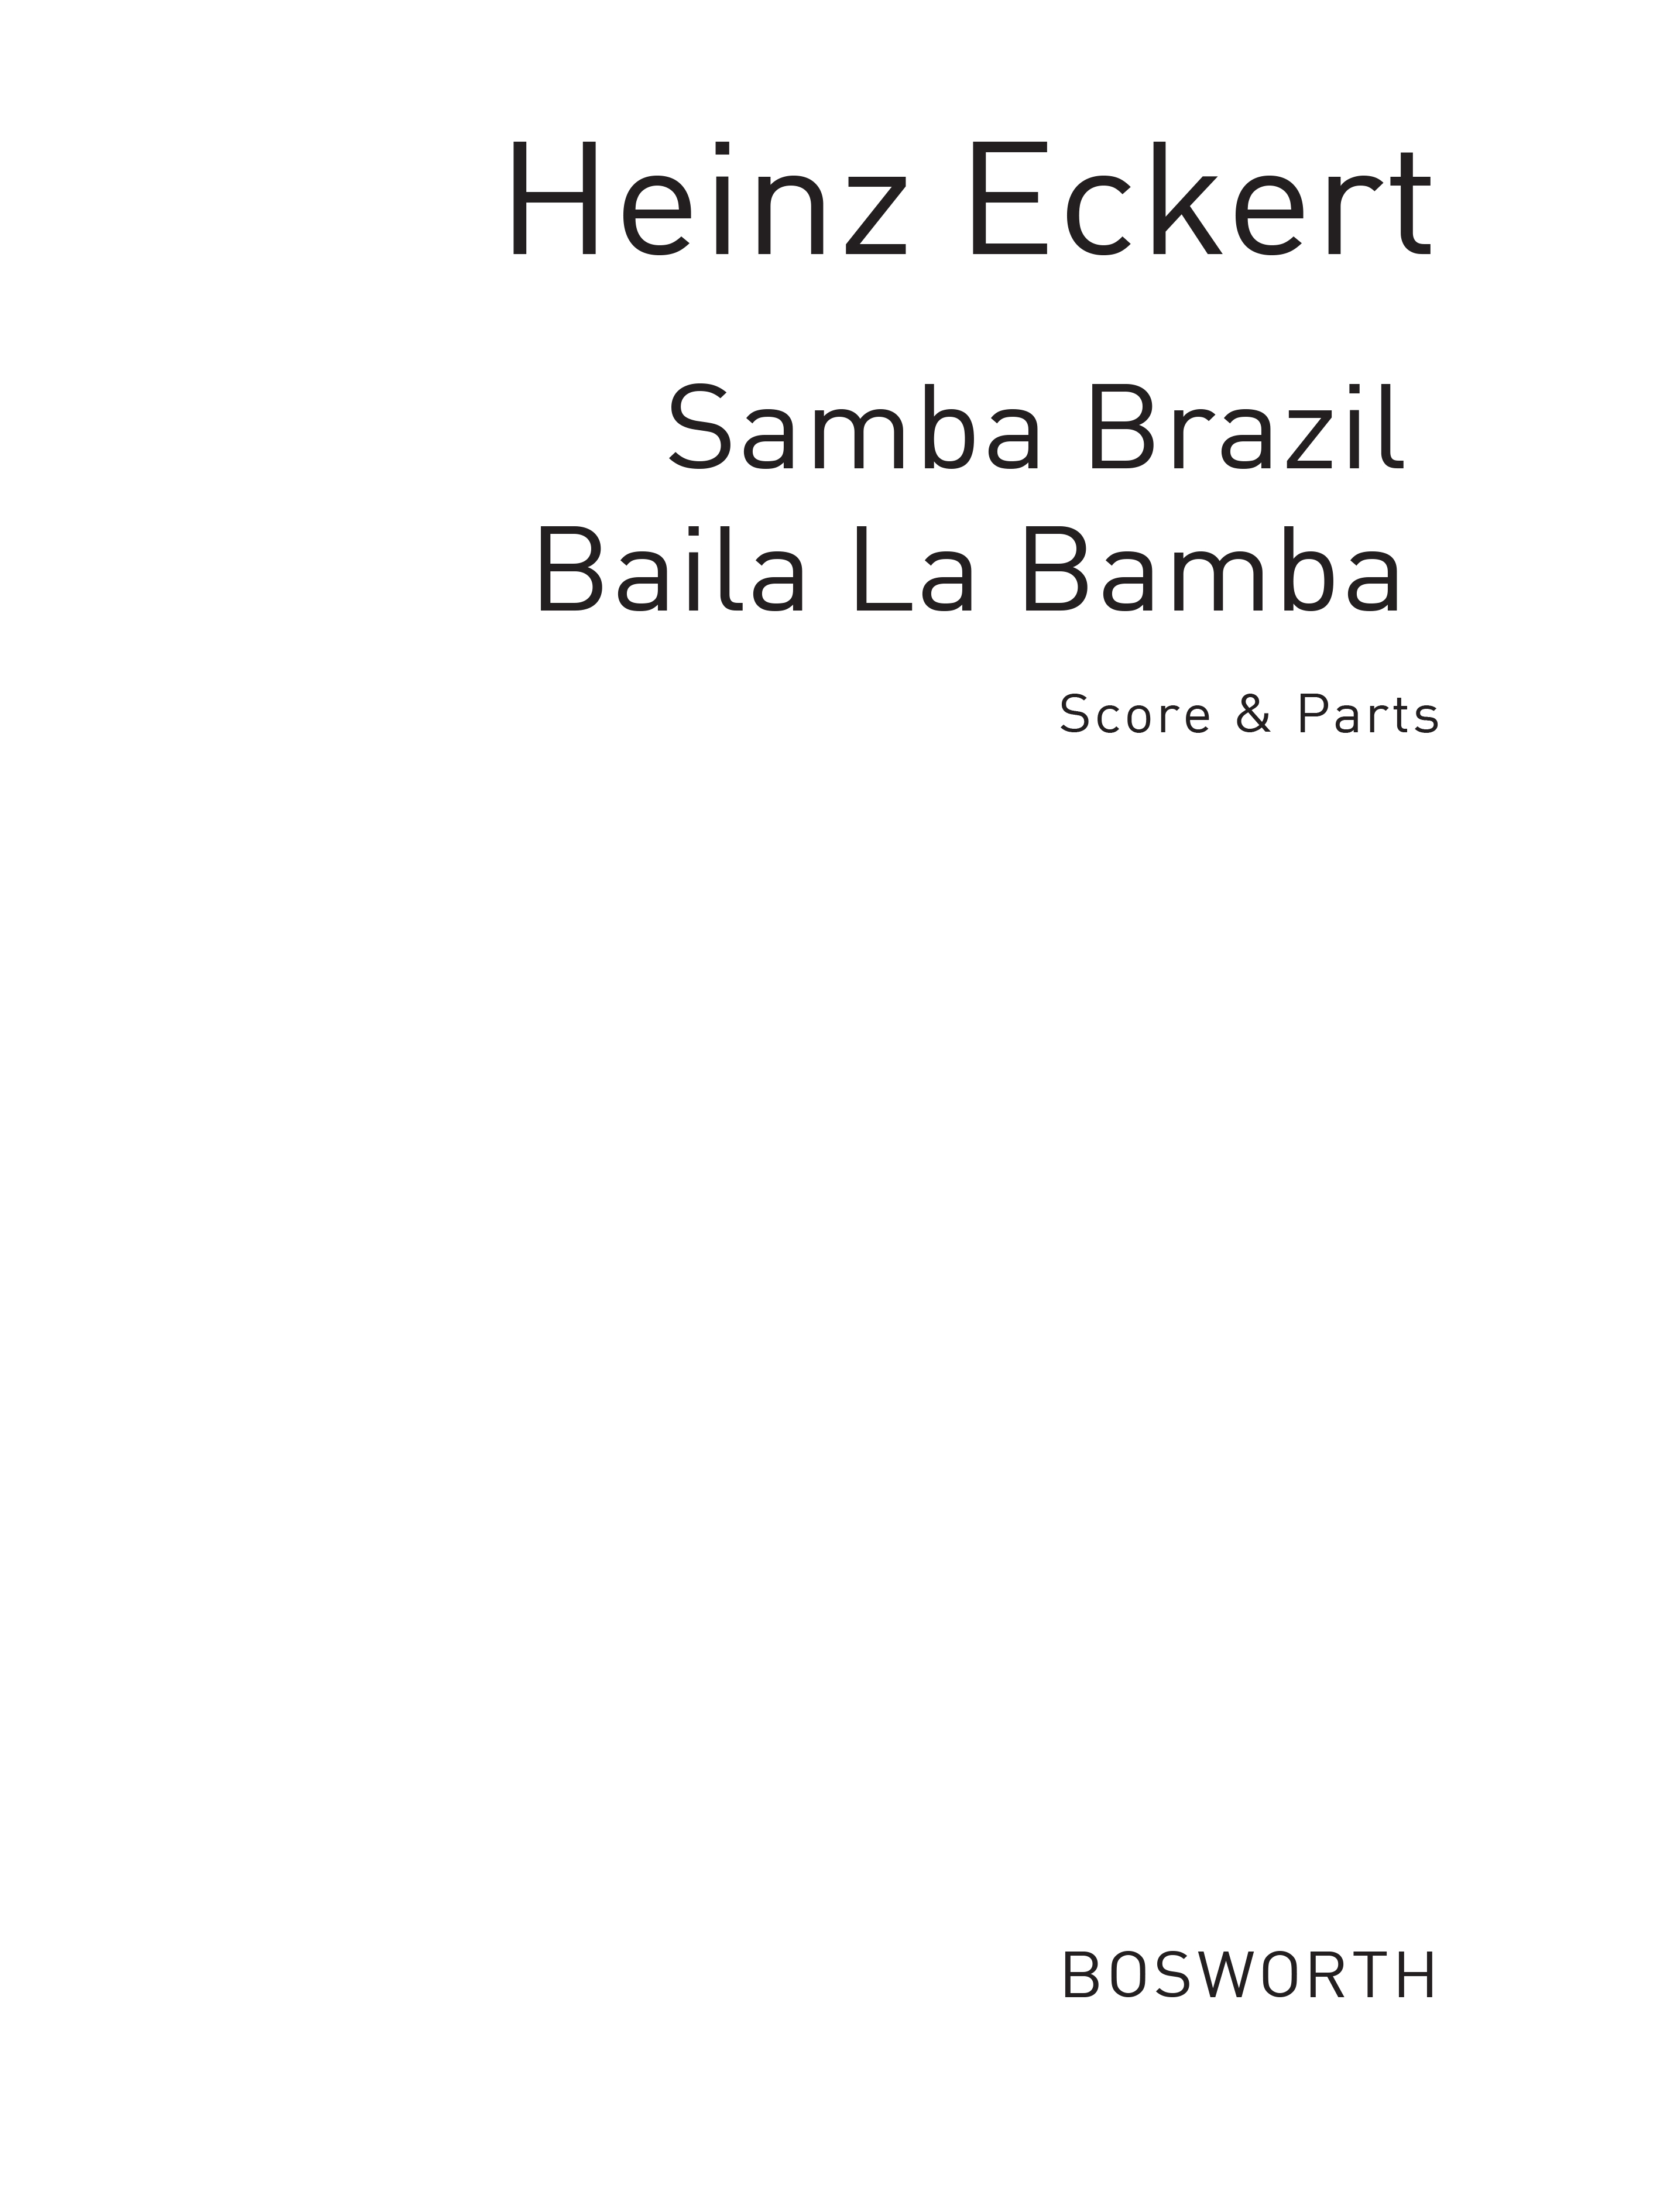 Eckert, H Samba Brazil/Wellnitz, G Bla La Bmba Tocm Bnd